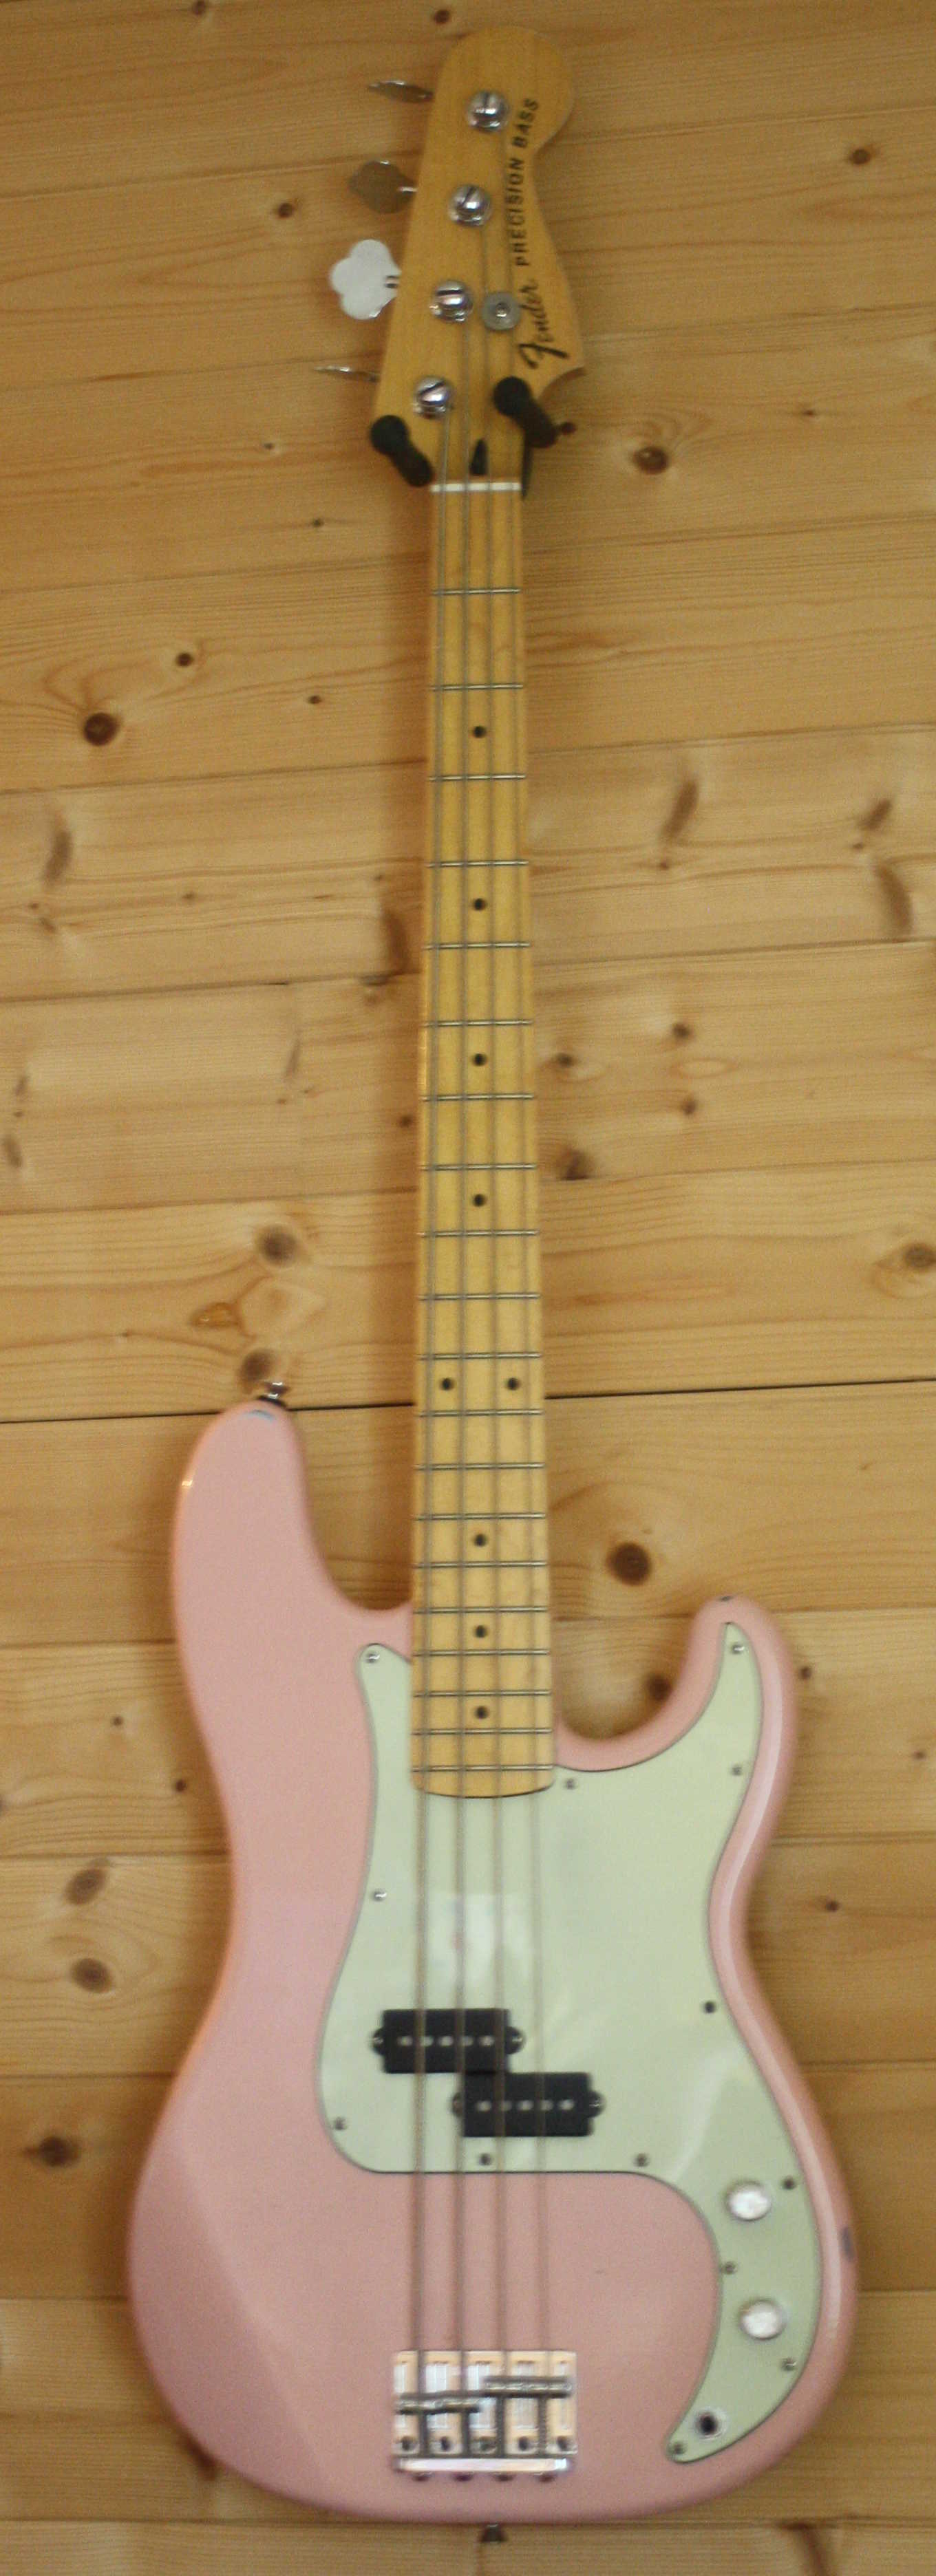 American Standard Precision Bass [1995-2000] Fender - Audiofanzine